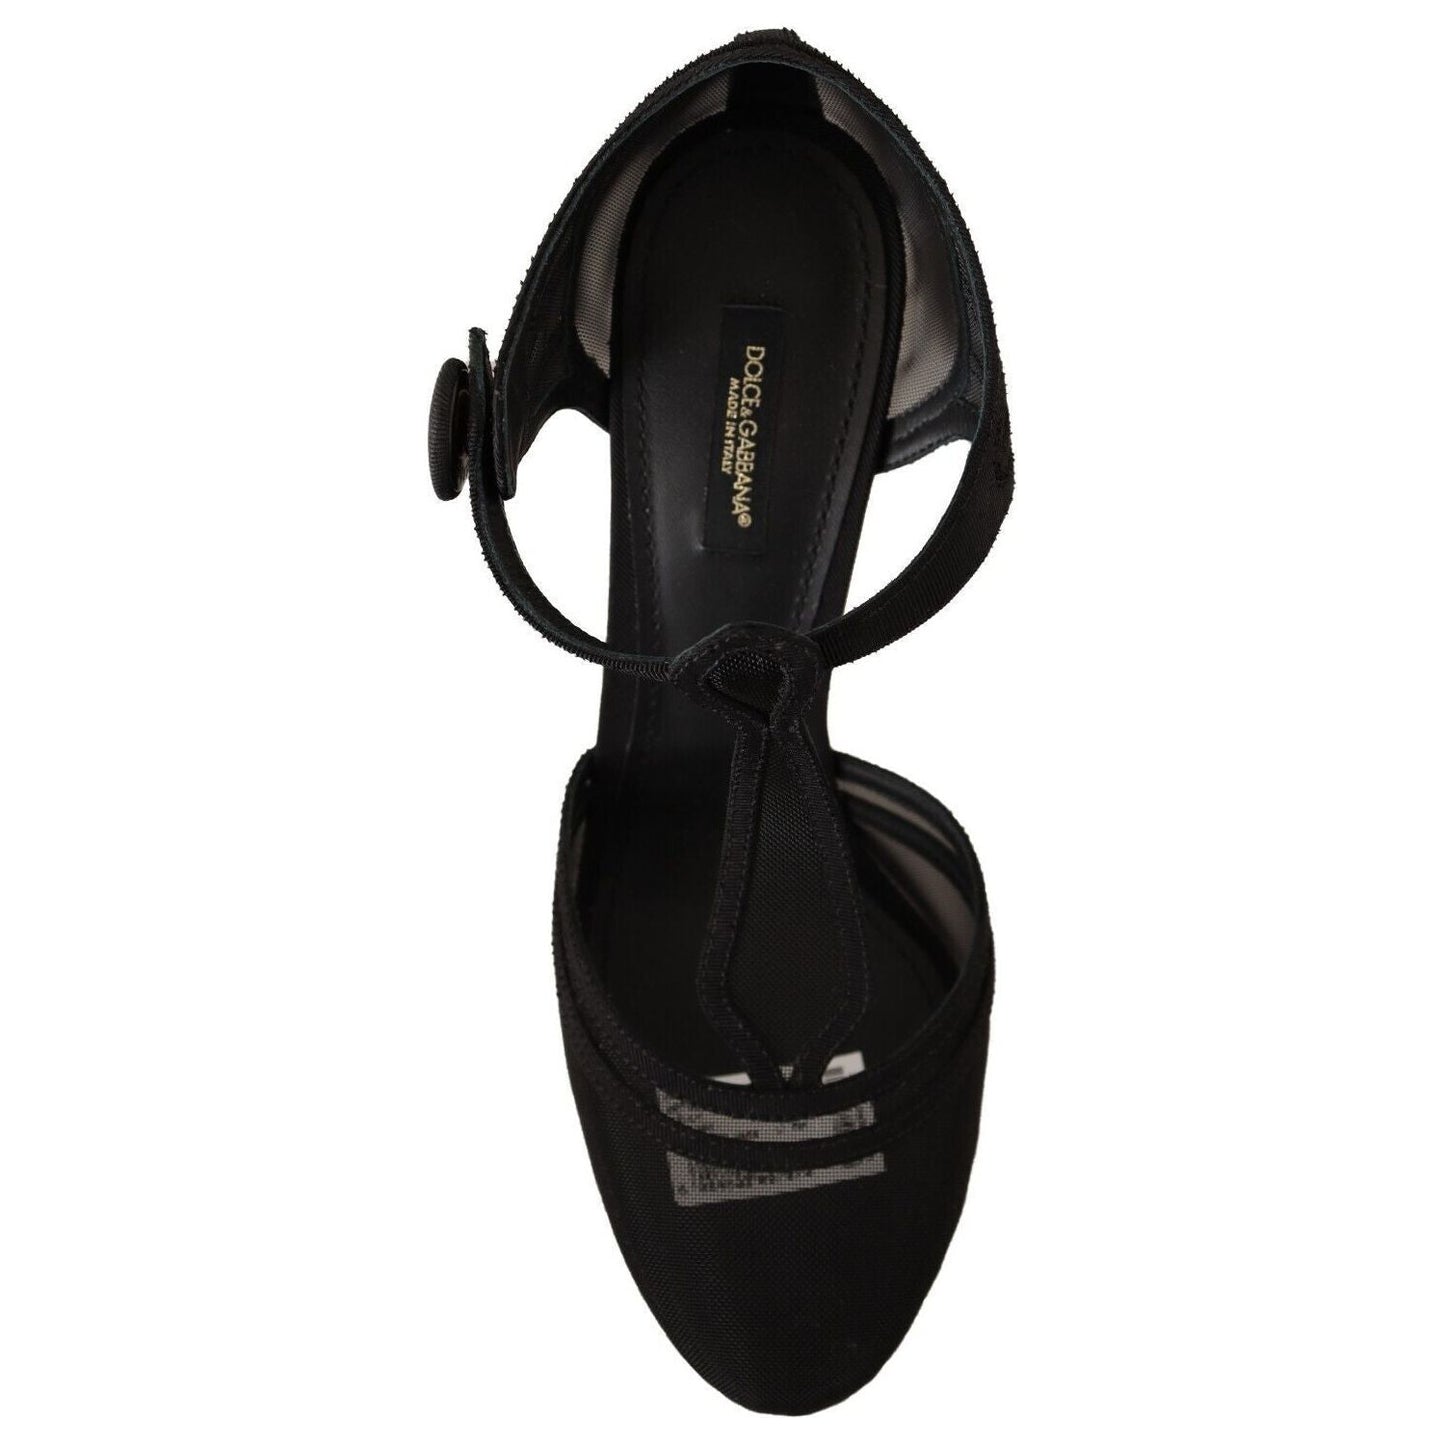 Dolce & Gabbana Elegant Mesh T-Strap Stiletto Pumps black-mesh-t-strap-stiletto-heels-pumps-shoes s-l1600-6-49-f05cfe24-9b5.jpg